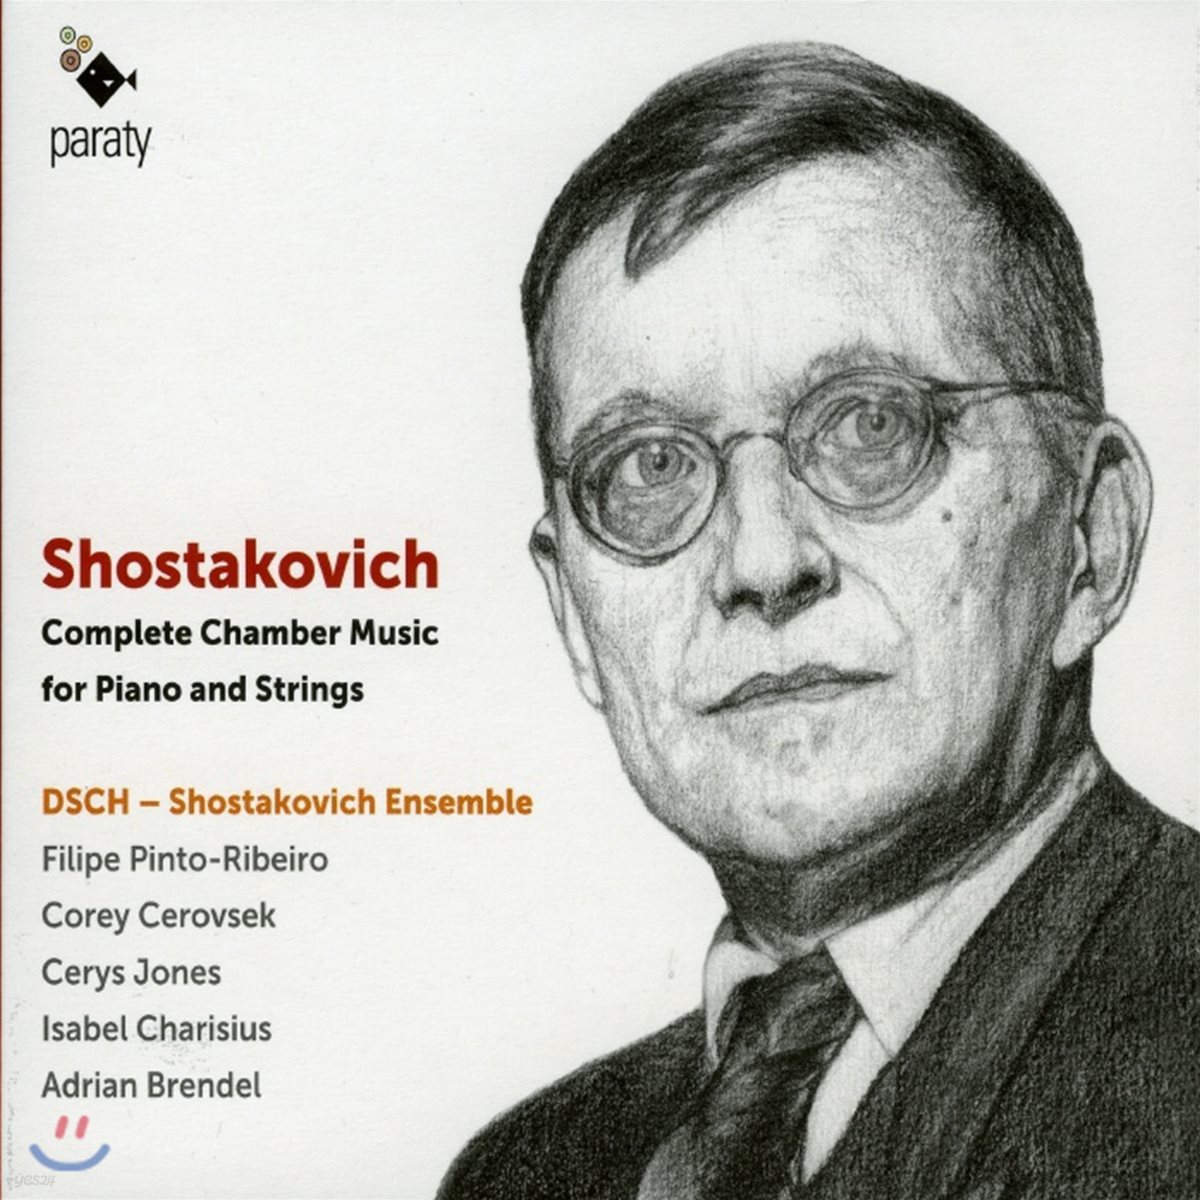 DSCH - Shostakovich Ensemble 쇼스타코비치: 피아노와 현악기를 위한 실내악 작품 전집 